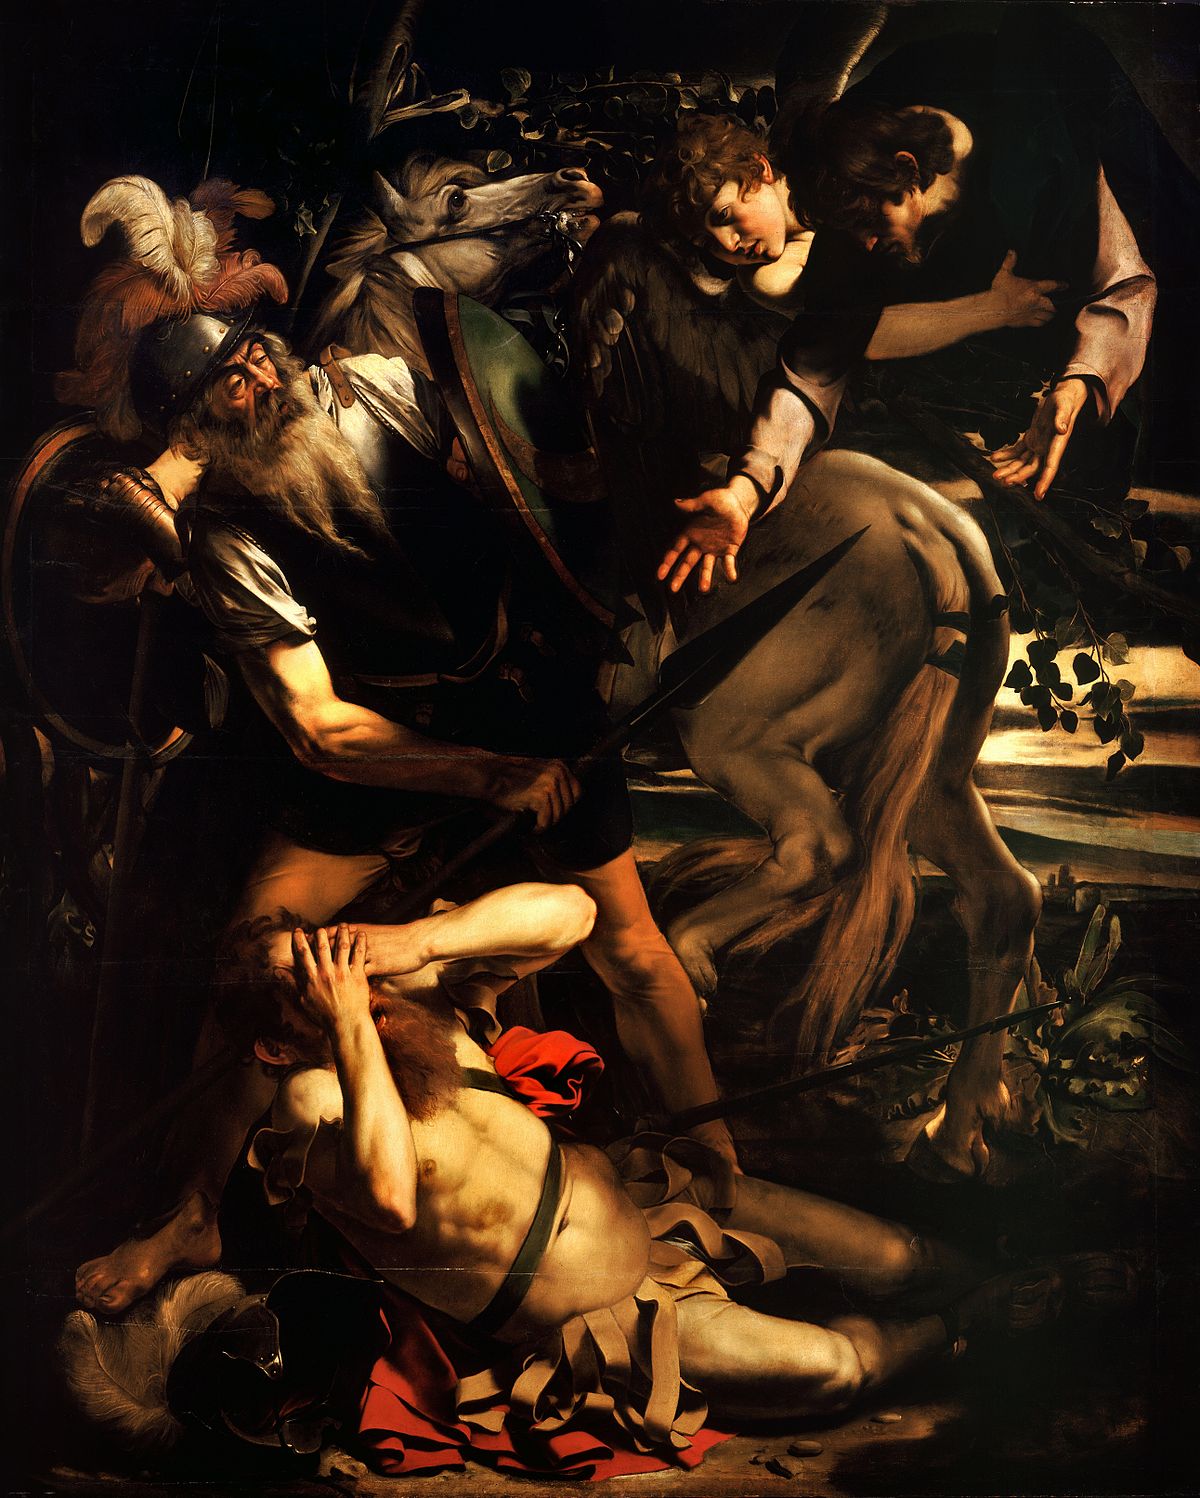 1200px-The_Conversion_of_Saint_Paul-Caravaggio_%28c._1600-1%29.jpg